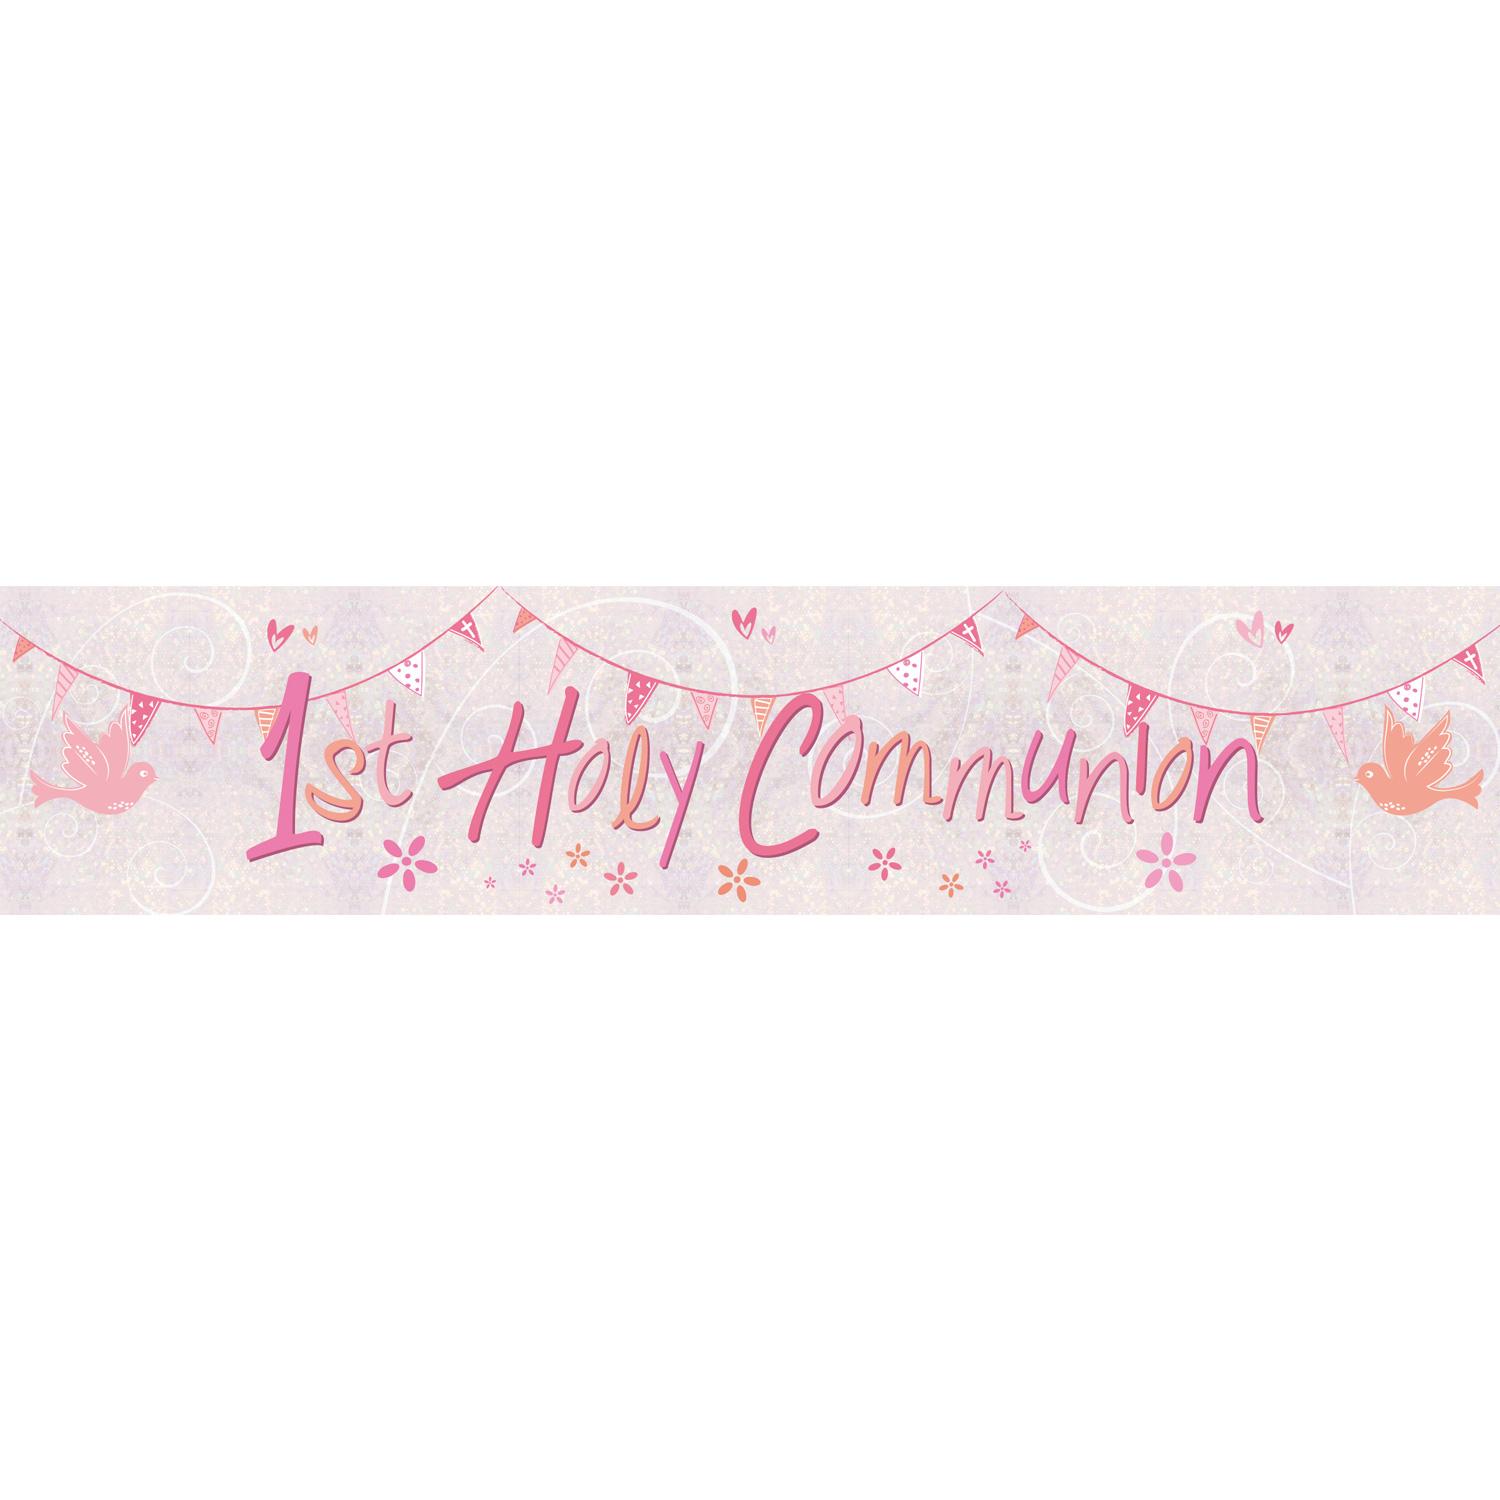 Communion Church Pink Holographic Foil Banner Decorations - Party Centre